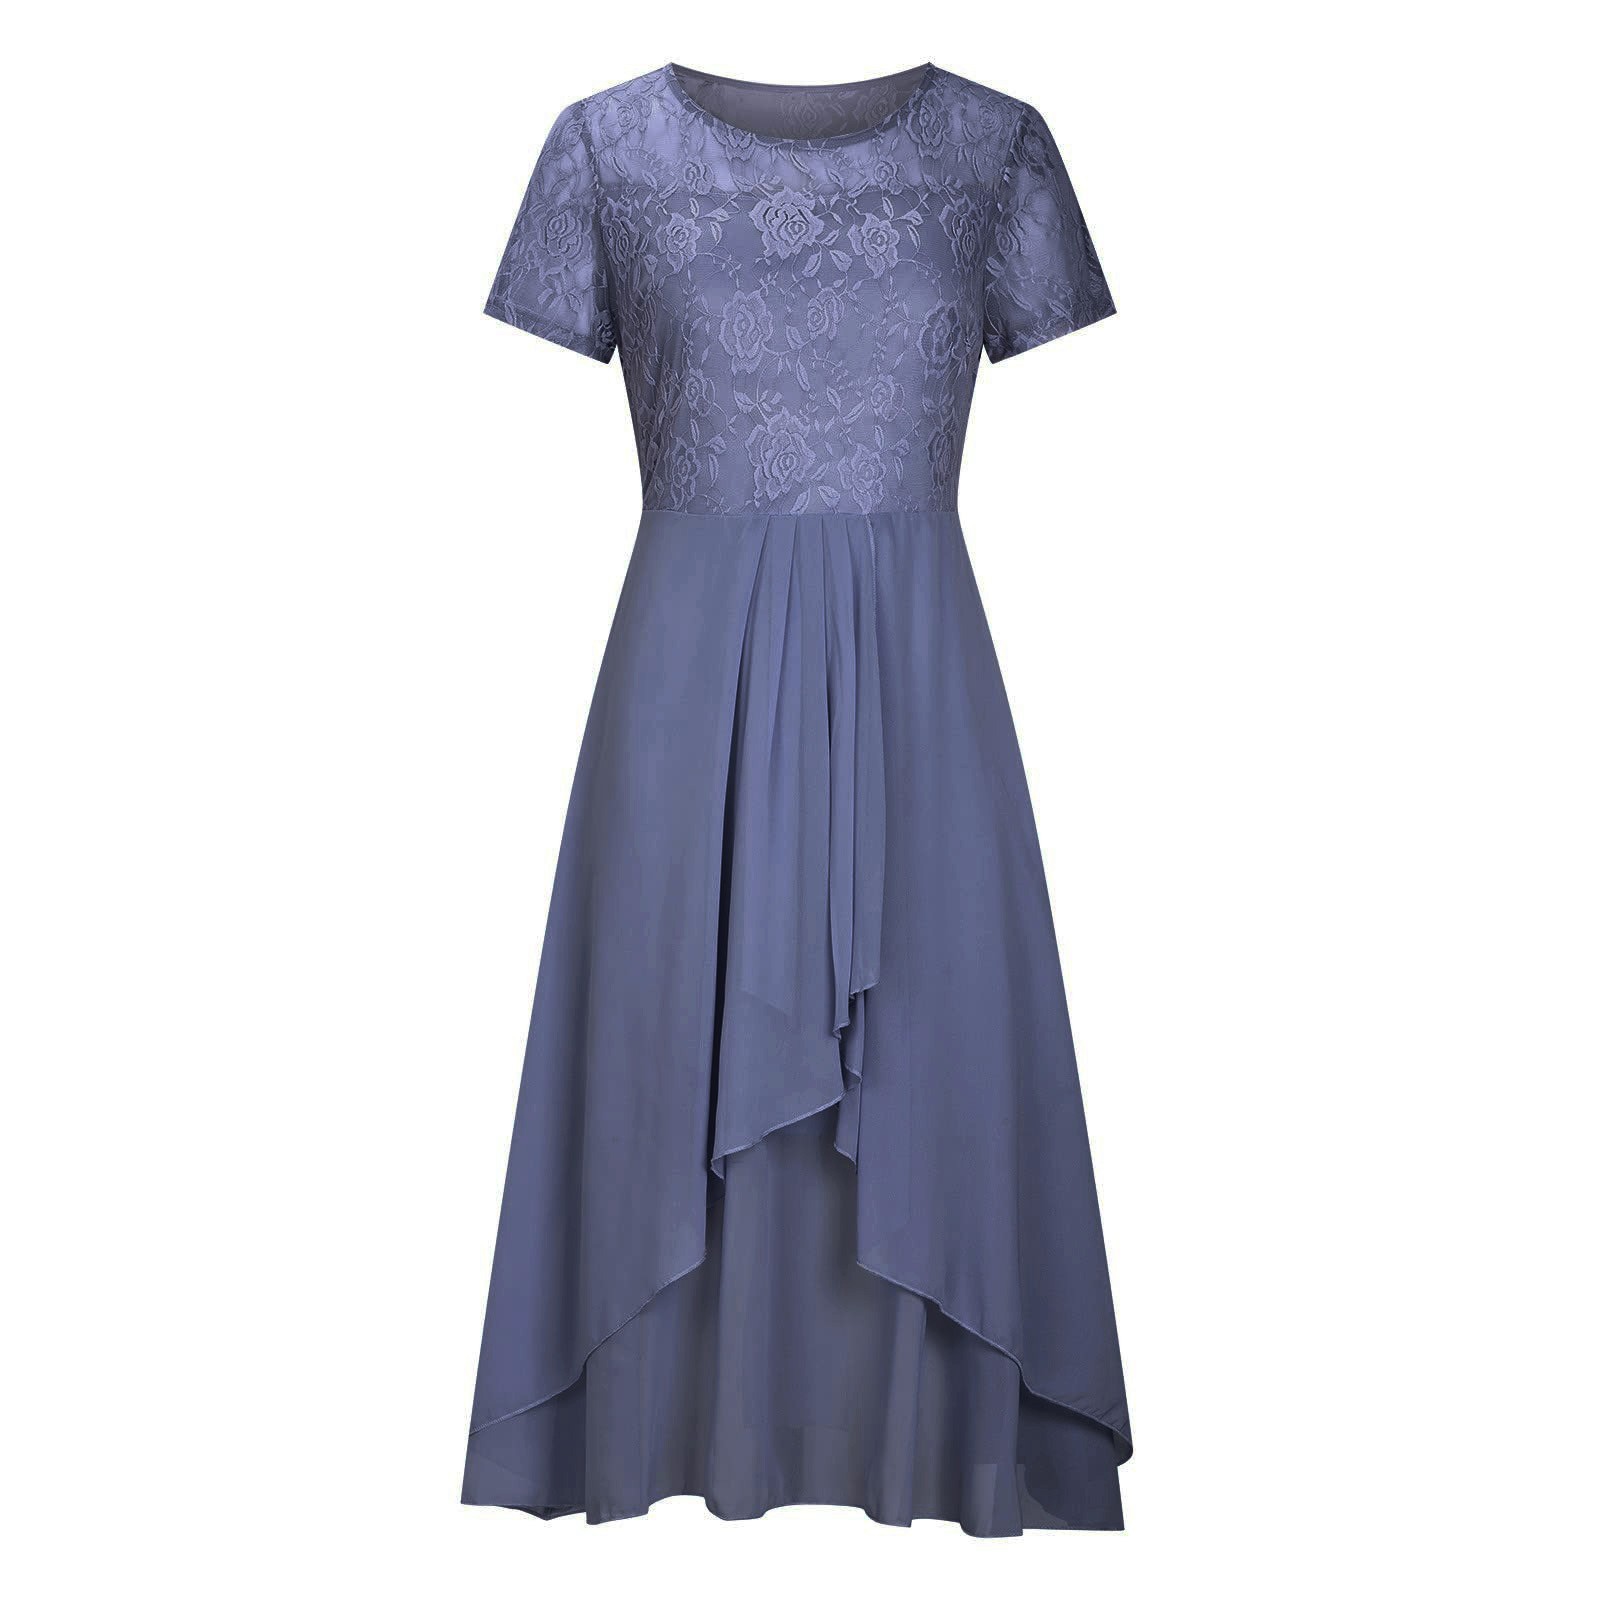 Royallove Women's Dress Chiffon Elegant Lace Patchwork Dress Cut-out ...